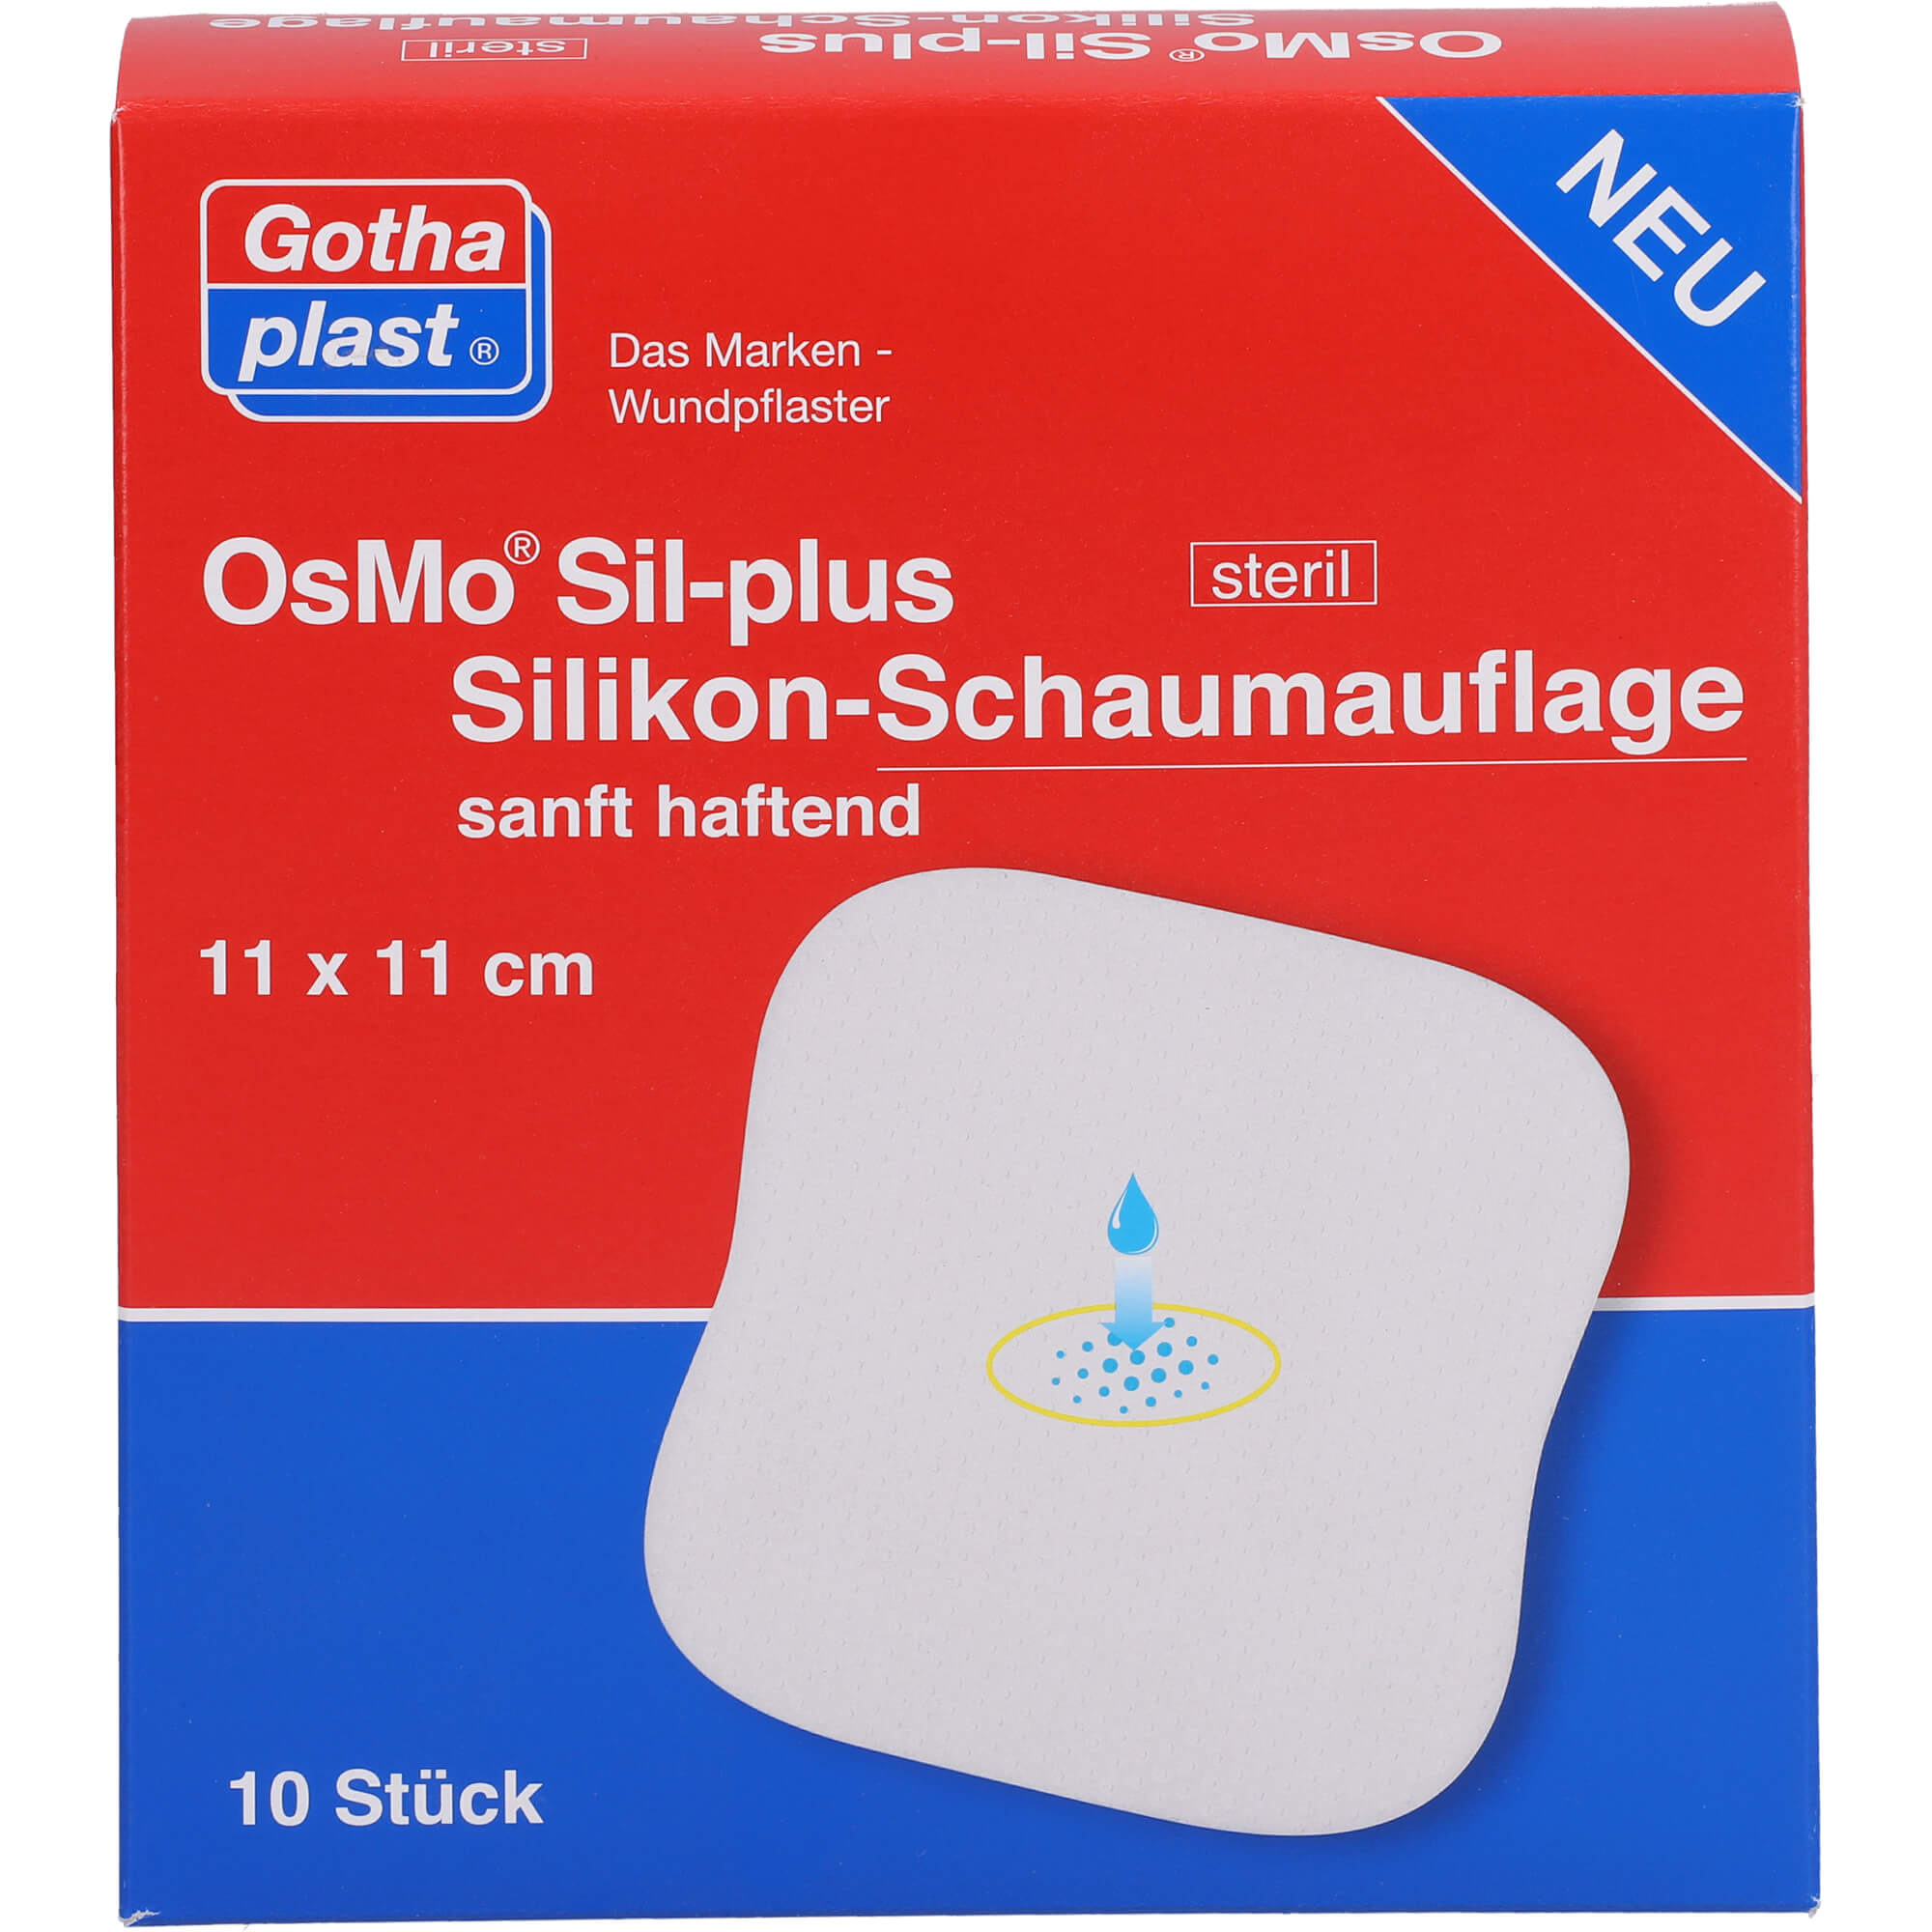 OSMO SIL-plus Silikon-Schaumauflage 11x11 cm ster.